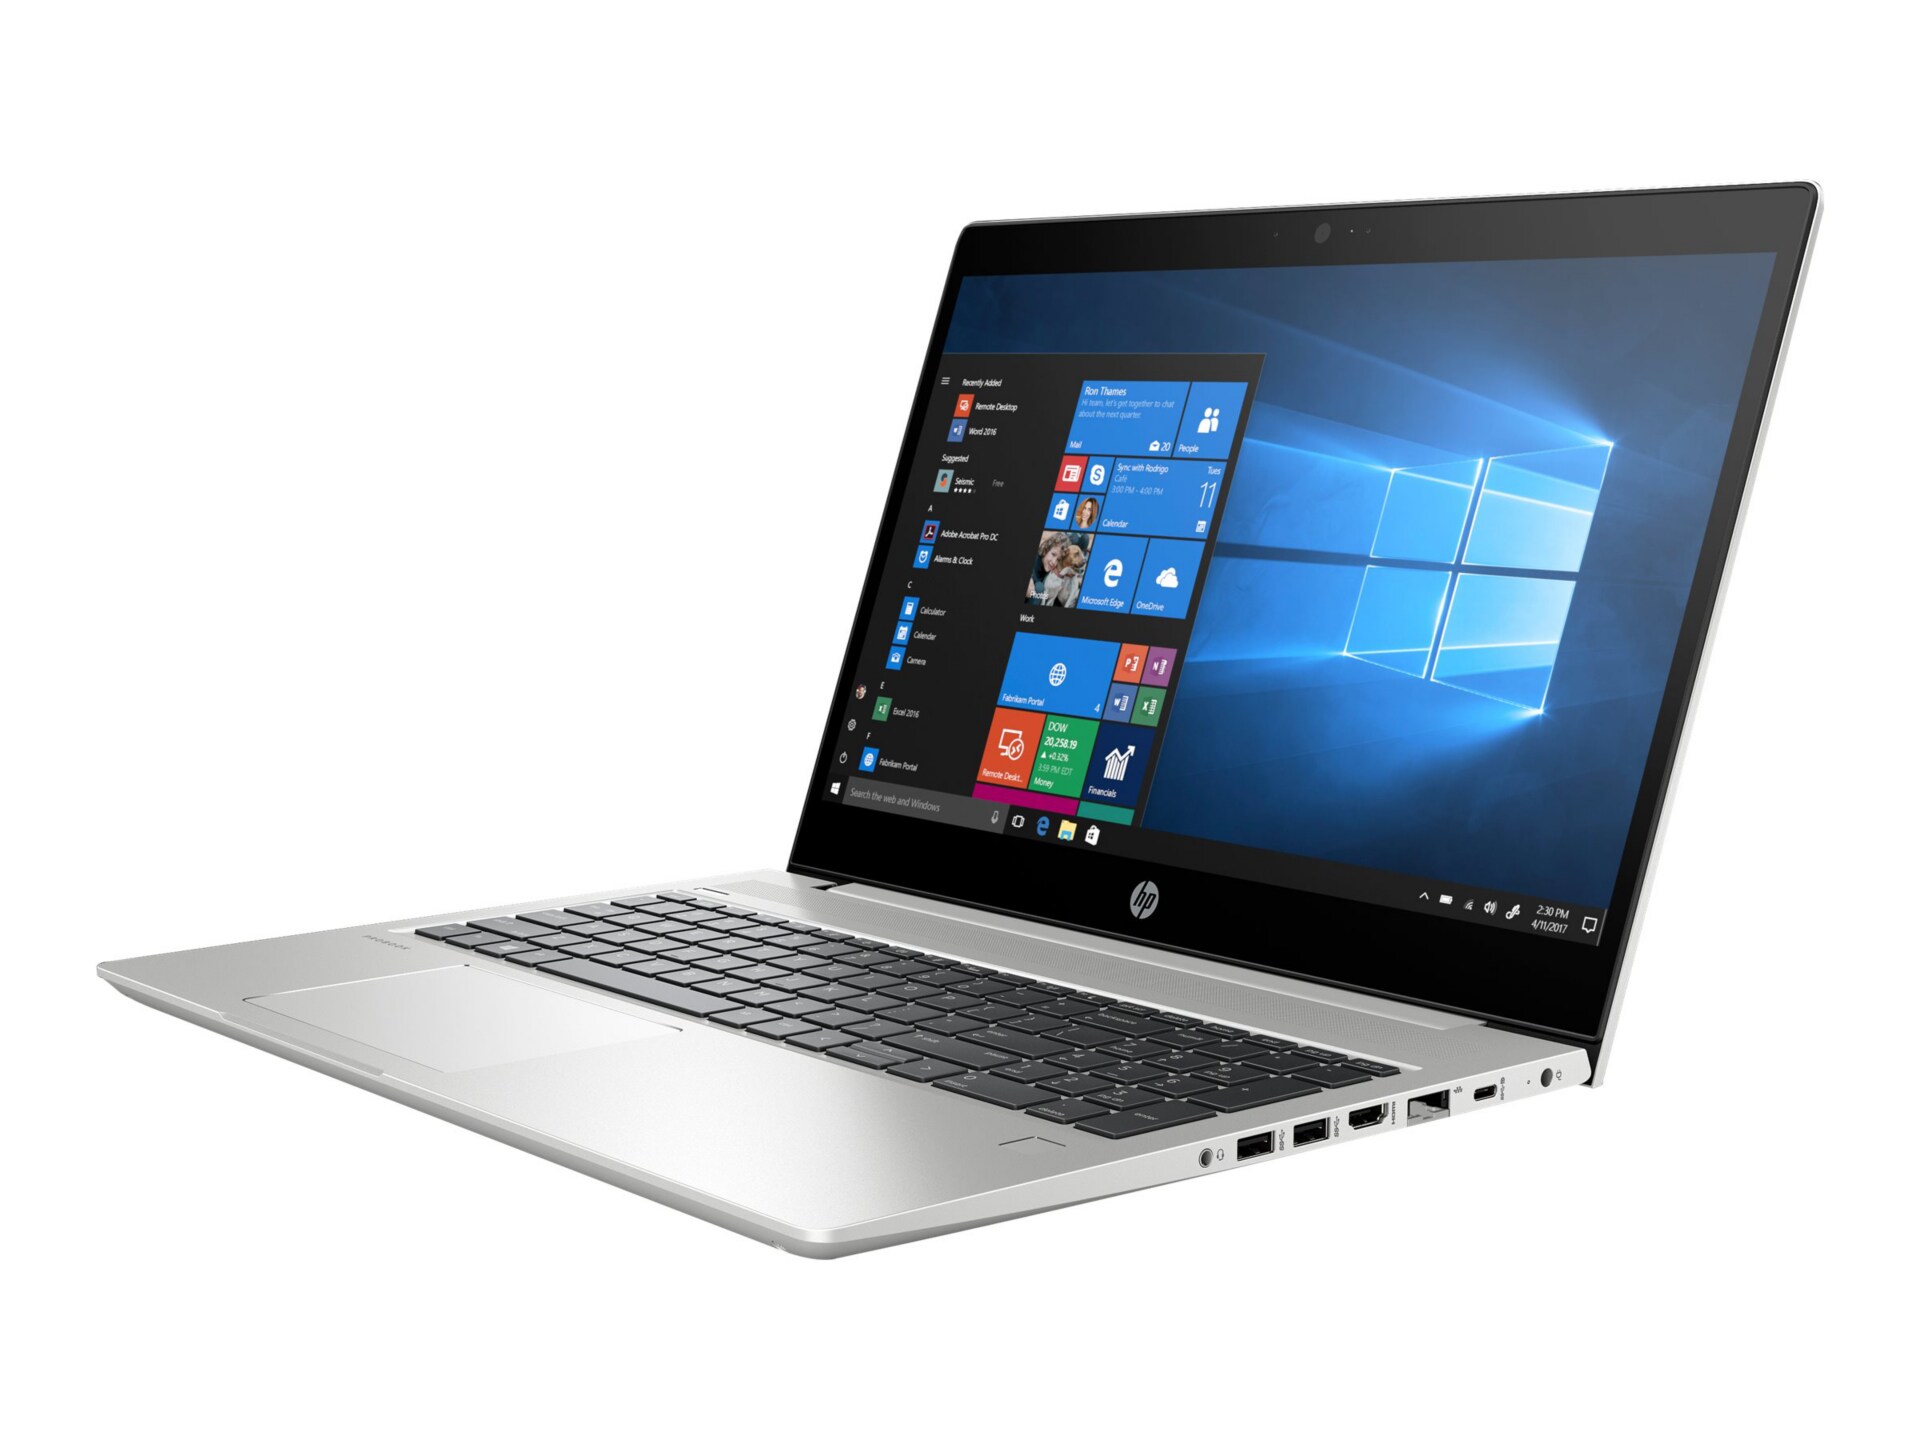 HP ProBook 455r G6 Notebook - 15.6" - Ryzen 5 3500U - 8 GB RAM - 500 GB HDD